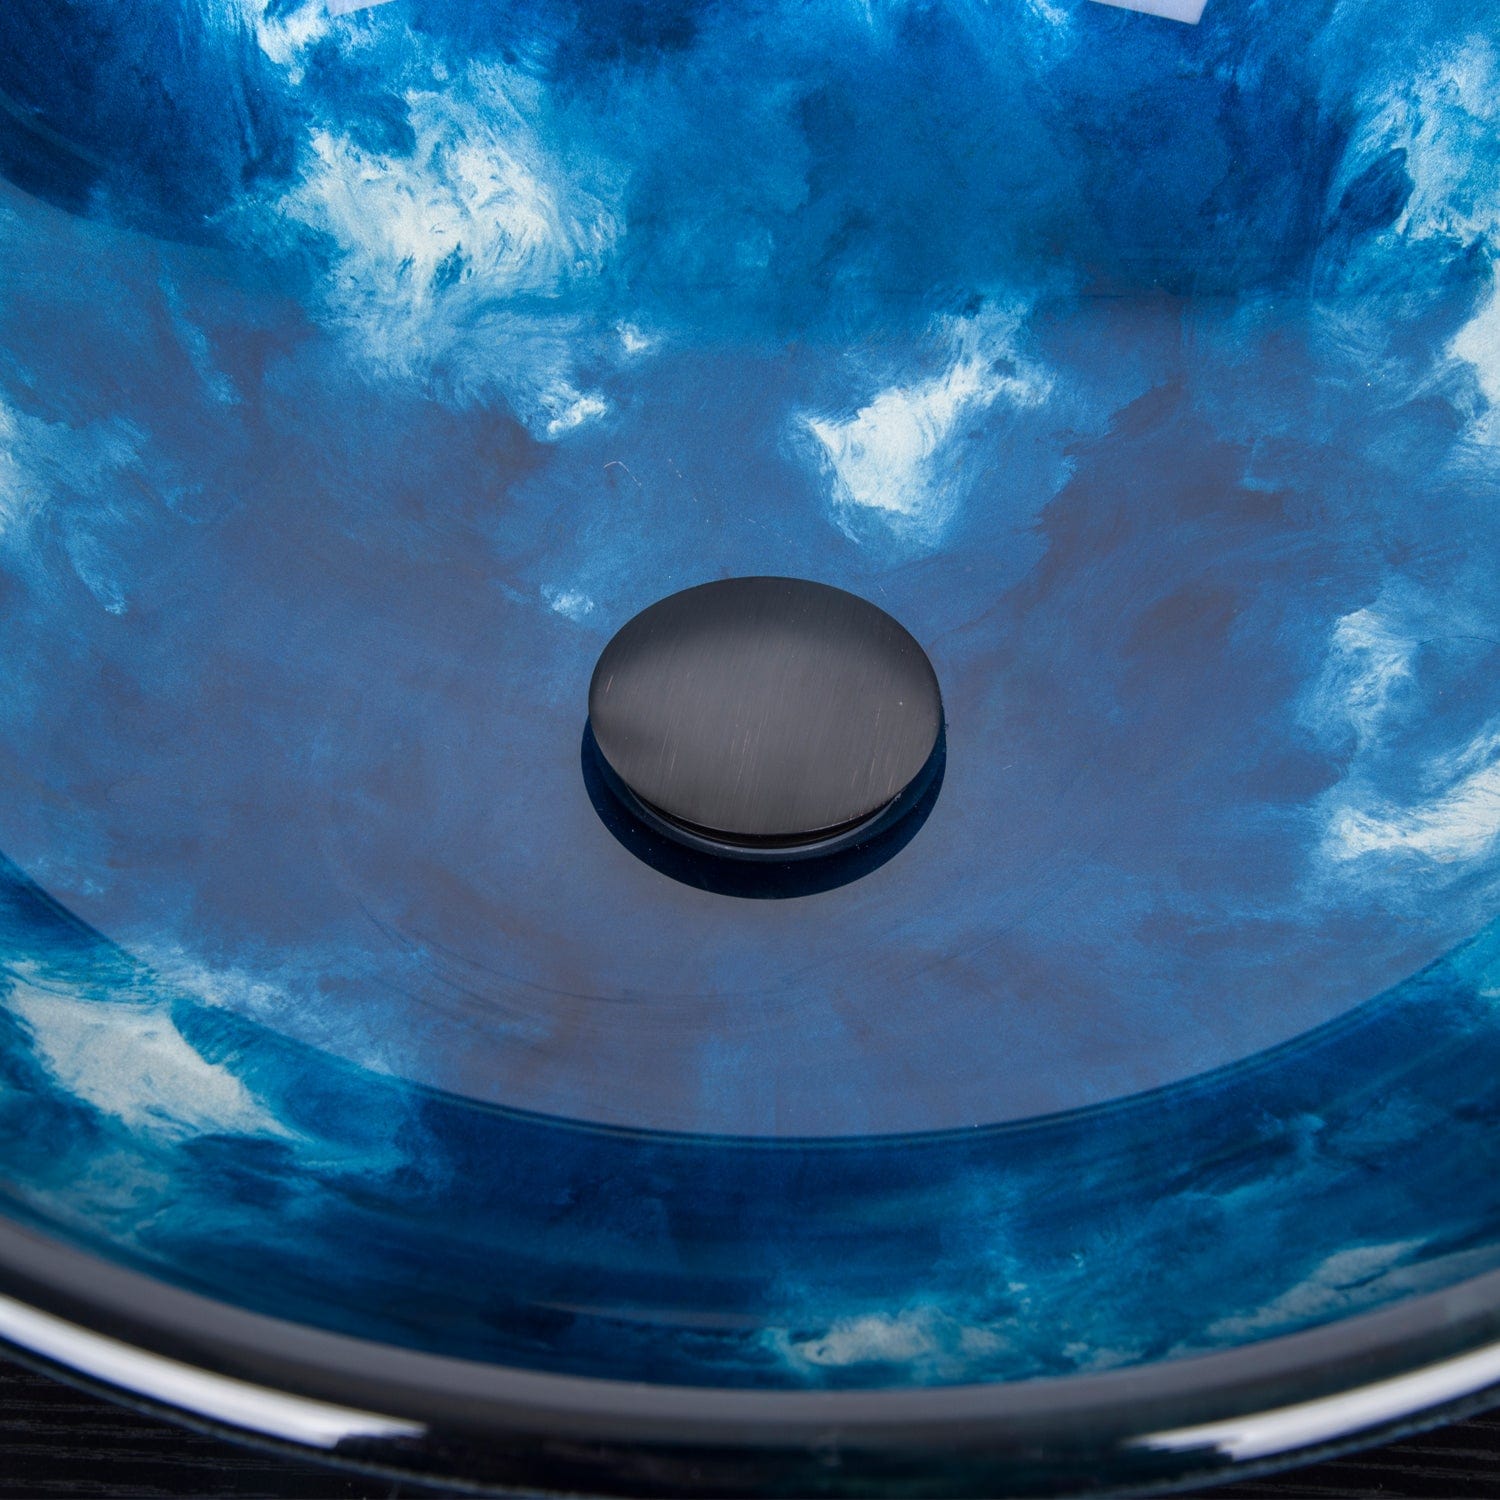 Details of Elecwish Artistic Vessel Sink Bathroom Glass Bowl Faucet Drain Combo 